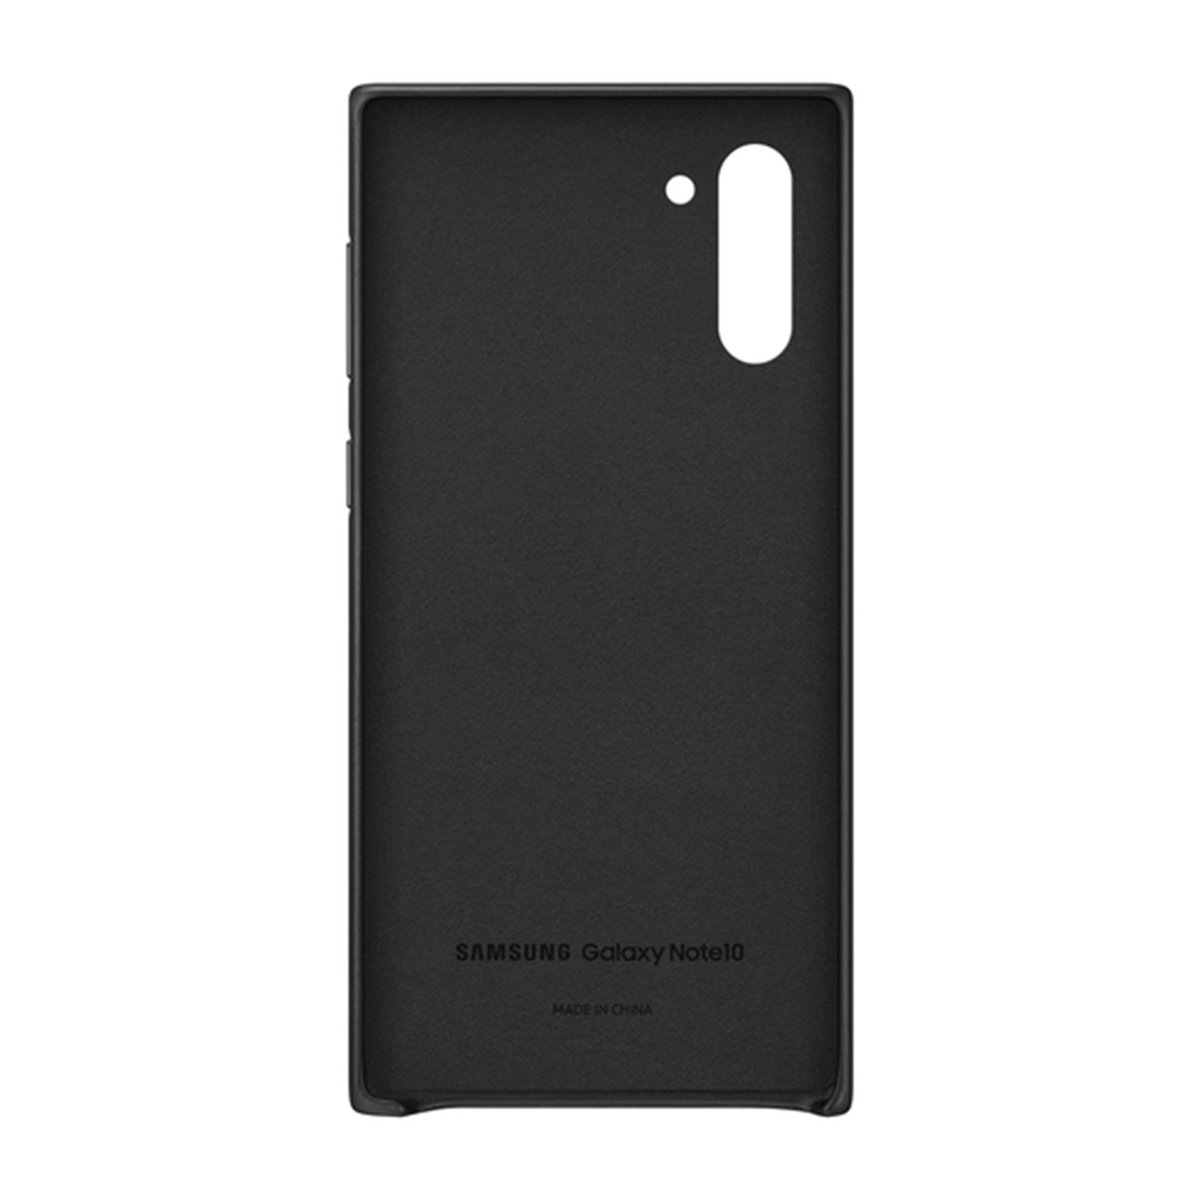 Samsung Galaxy Note10 Leather Case VN970 Black